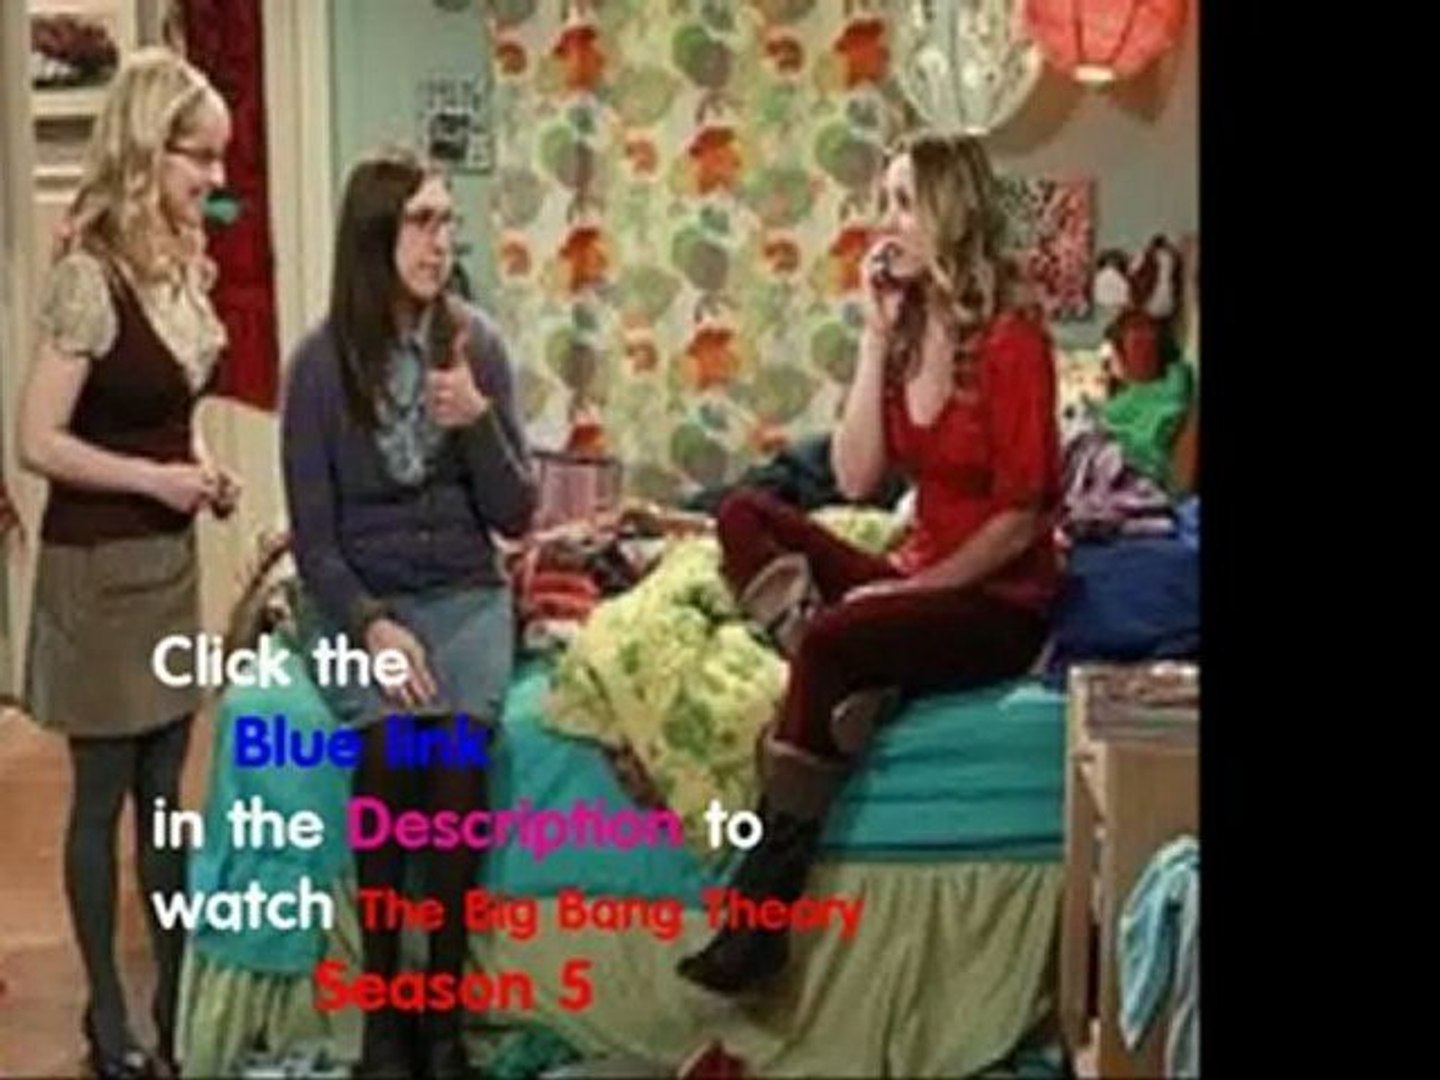 The Big Bang Theory S5E16